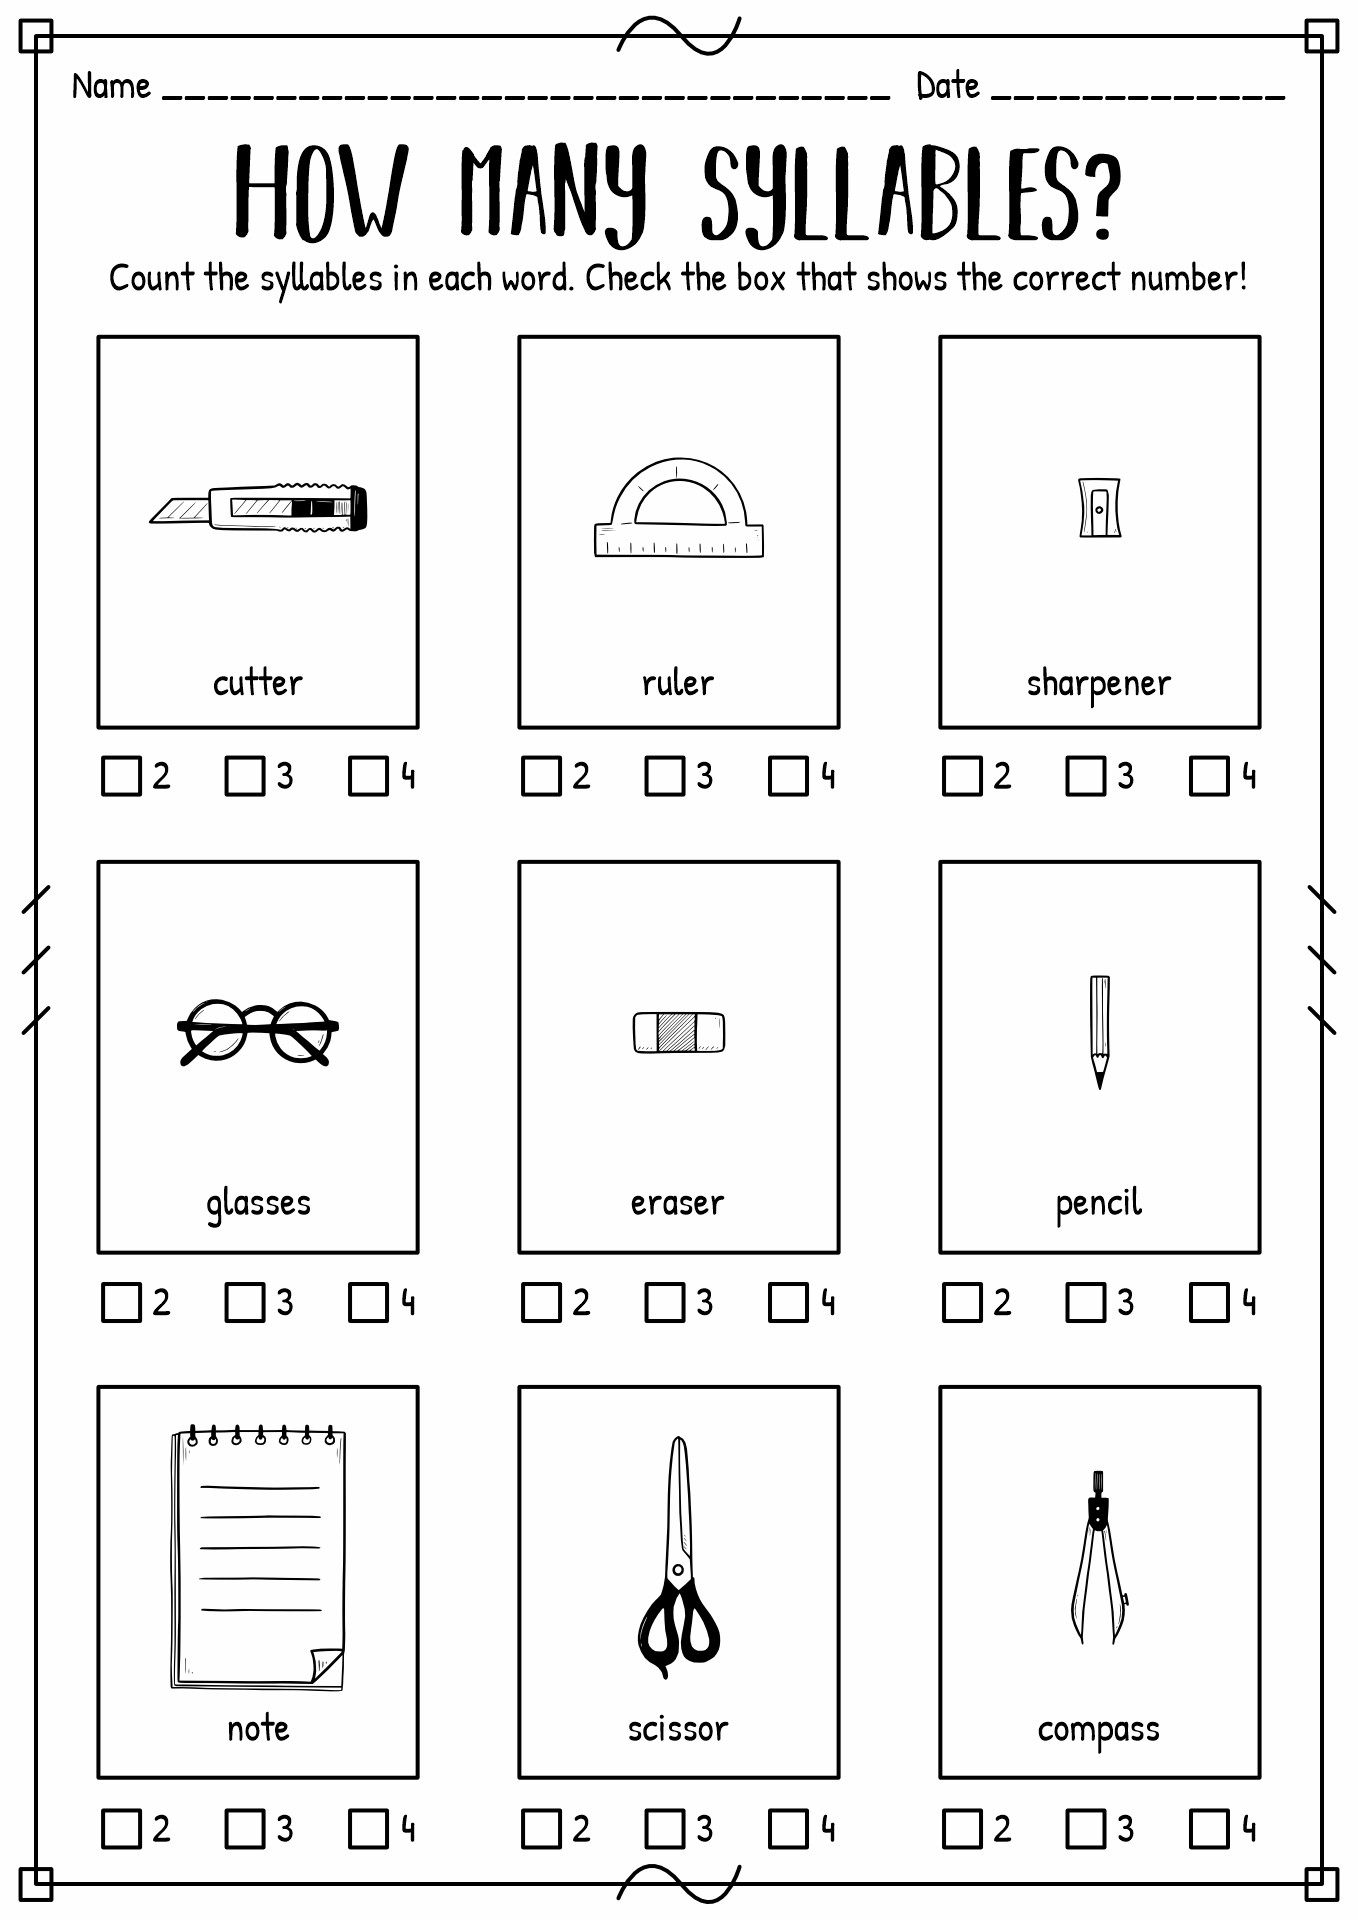 syllables-worksheets